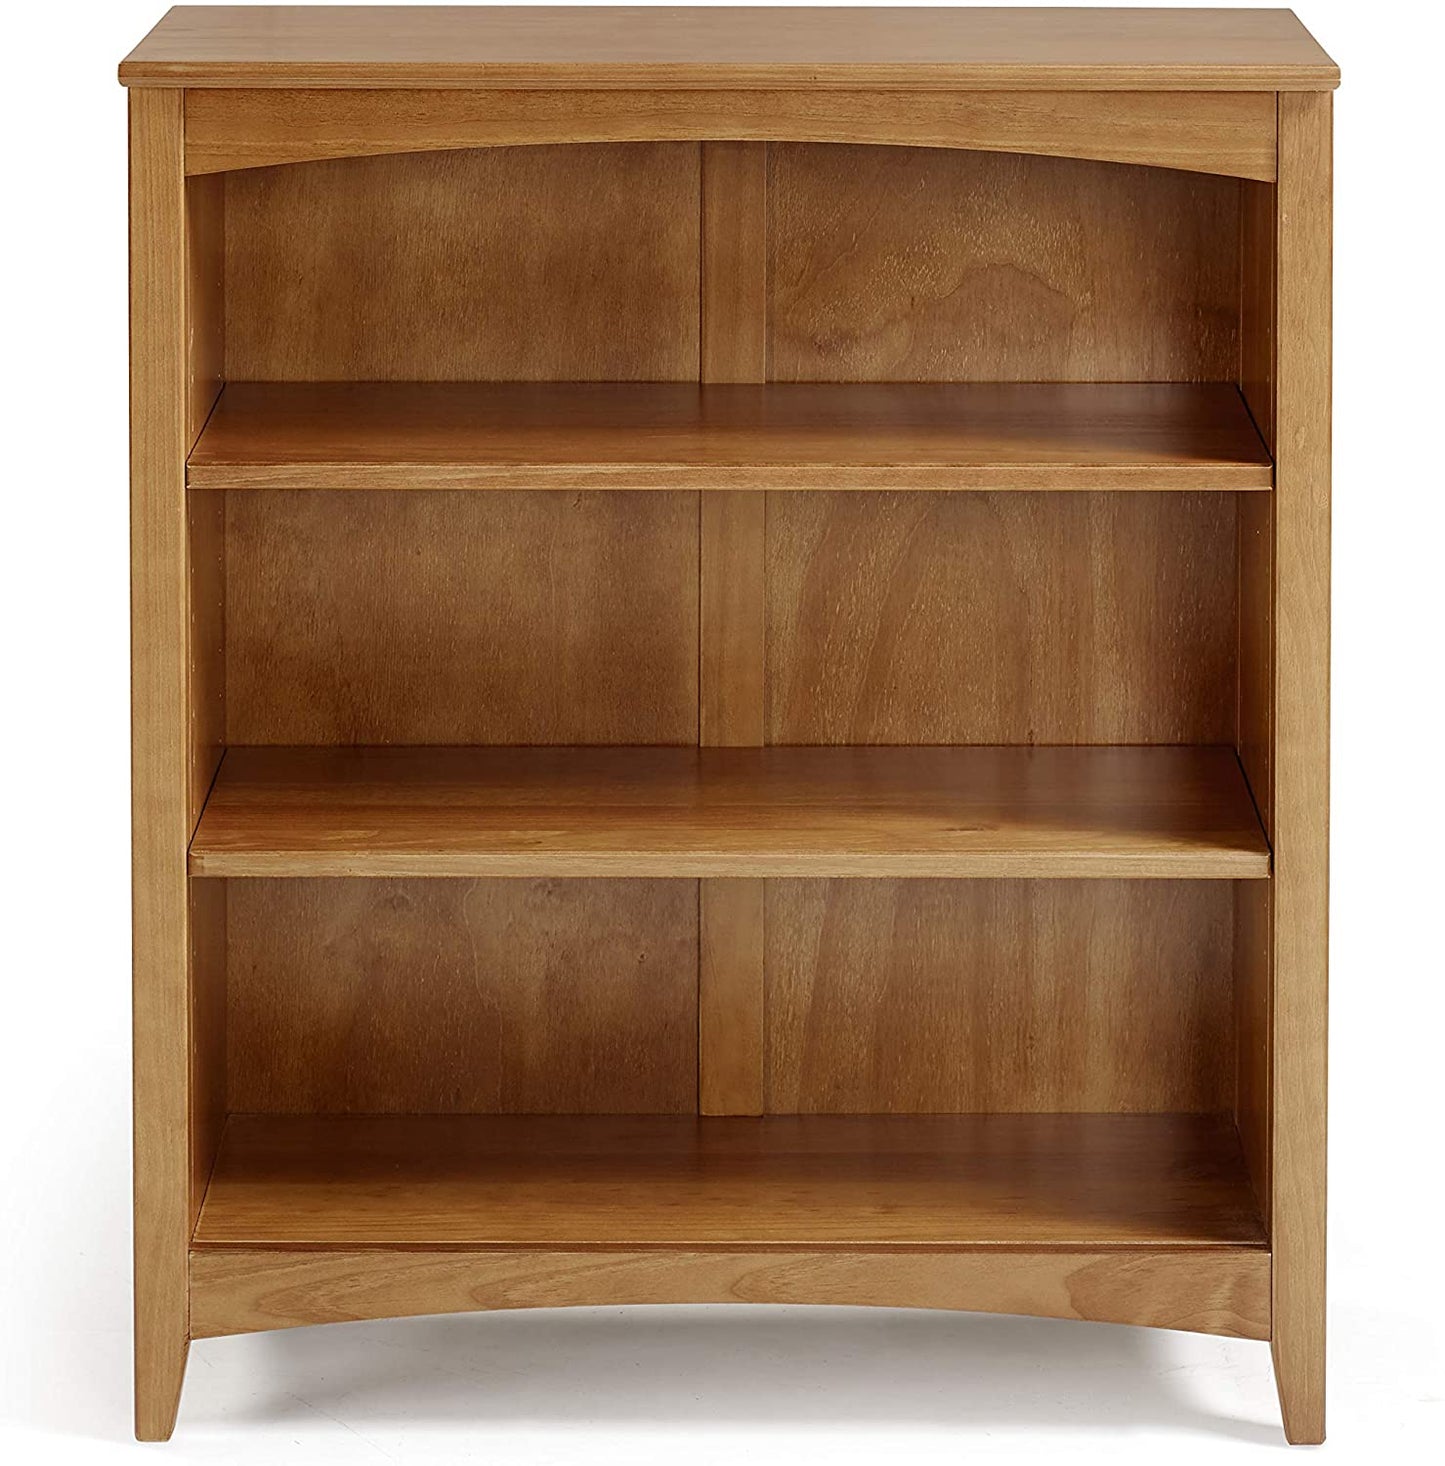 Bookshelf: Shaker Style 3-Shelf Bookcase